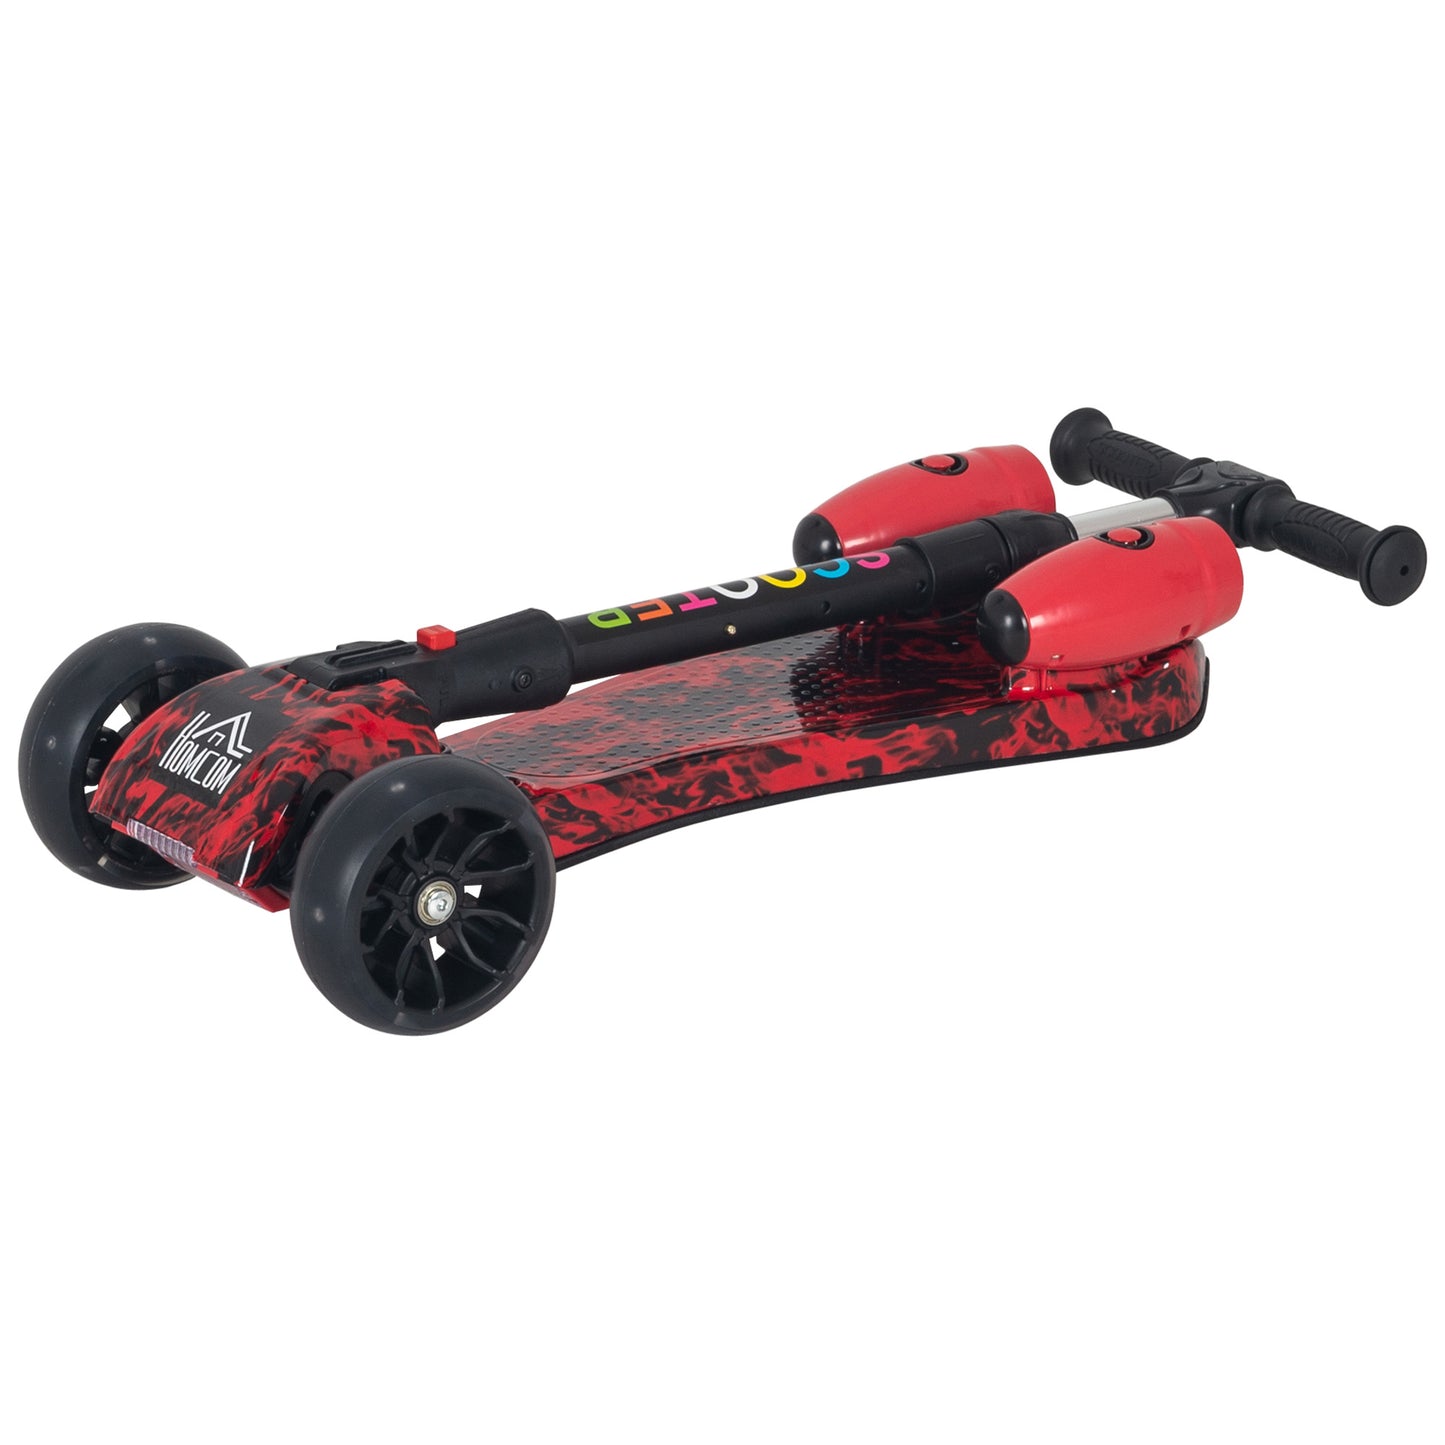 HOMCOM Kids Tri-Wheel Plastic Scooter w/ Engine-Look Water Spray Red